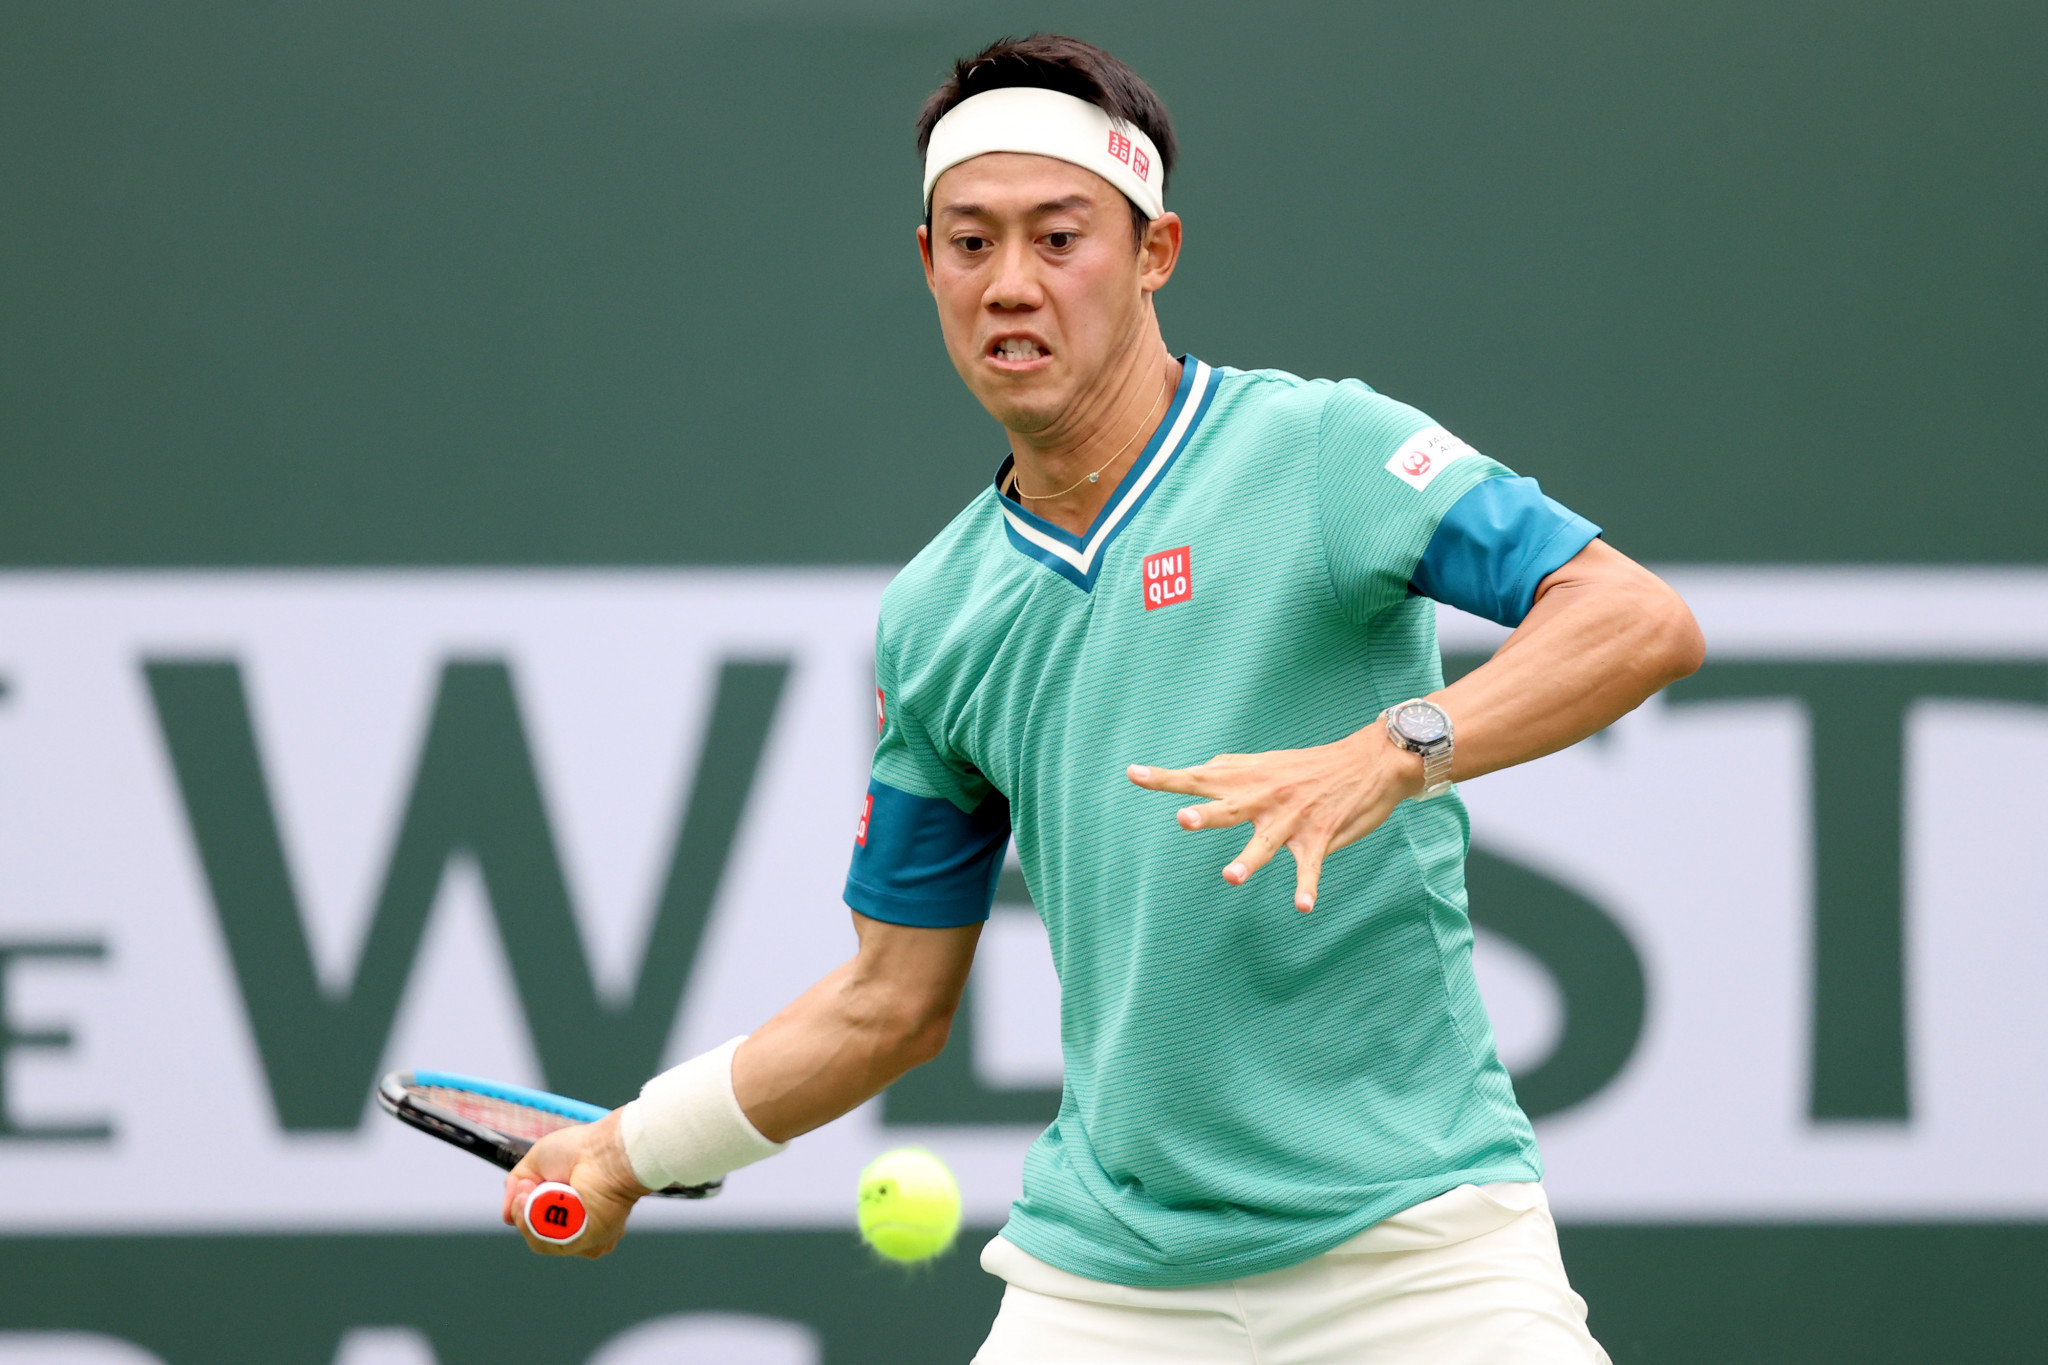 Nishikori rallies to reach Indian Wells Masters second round